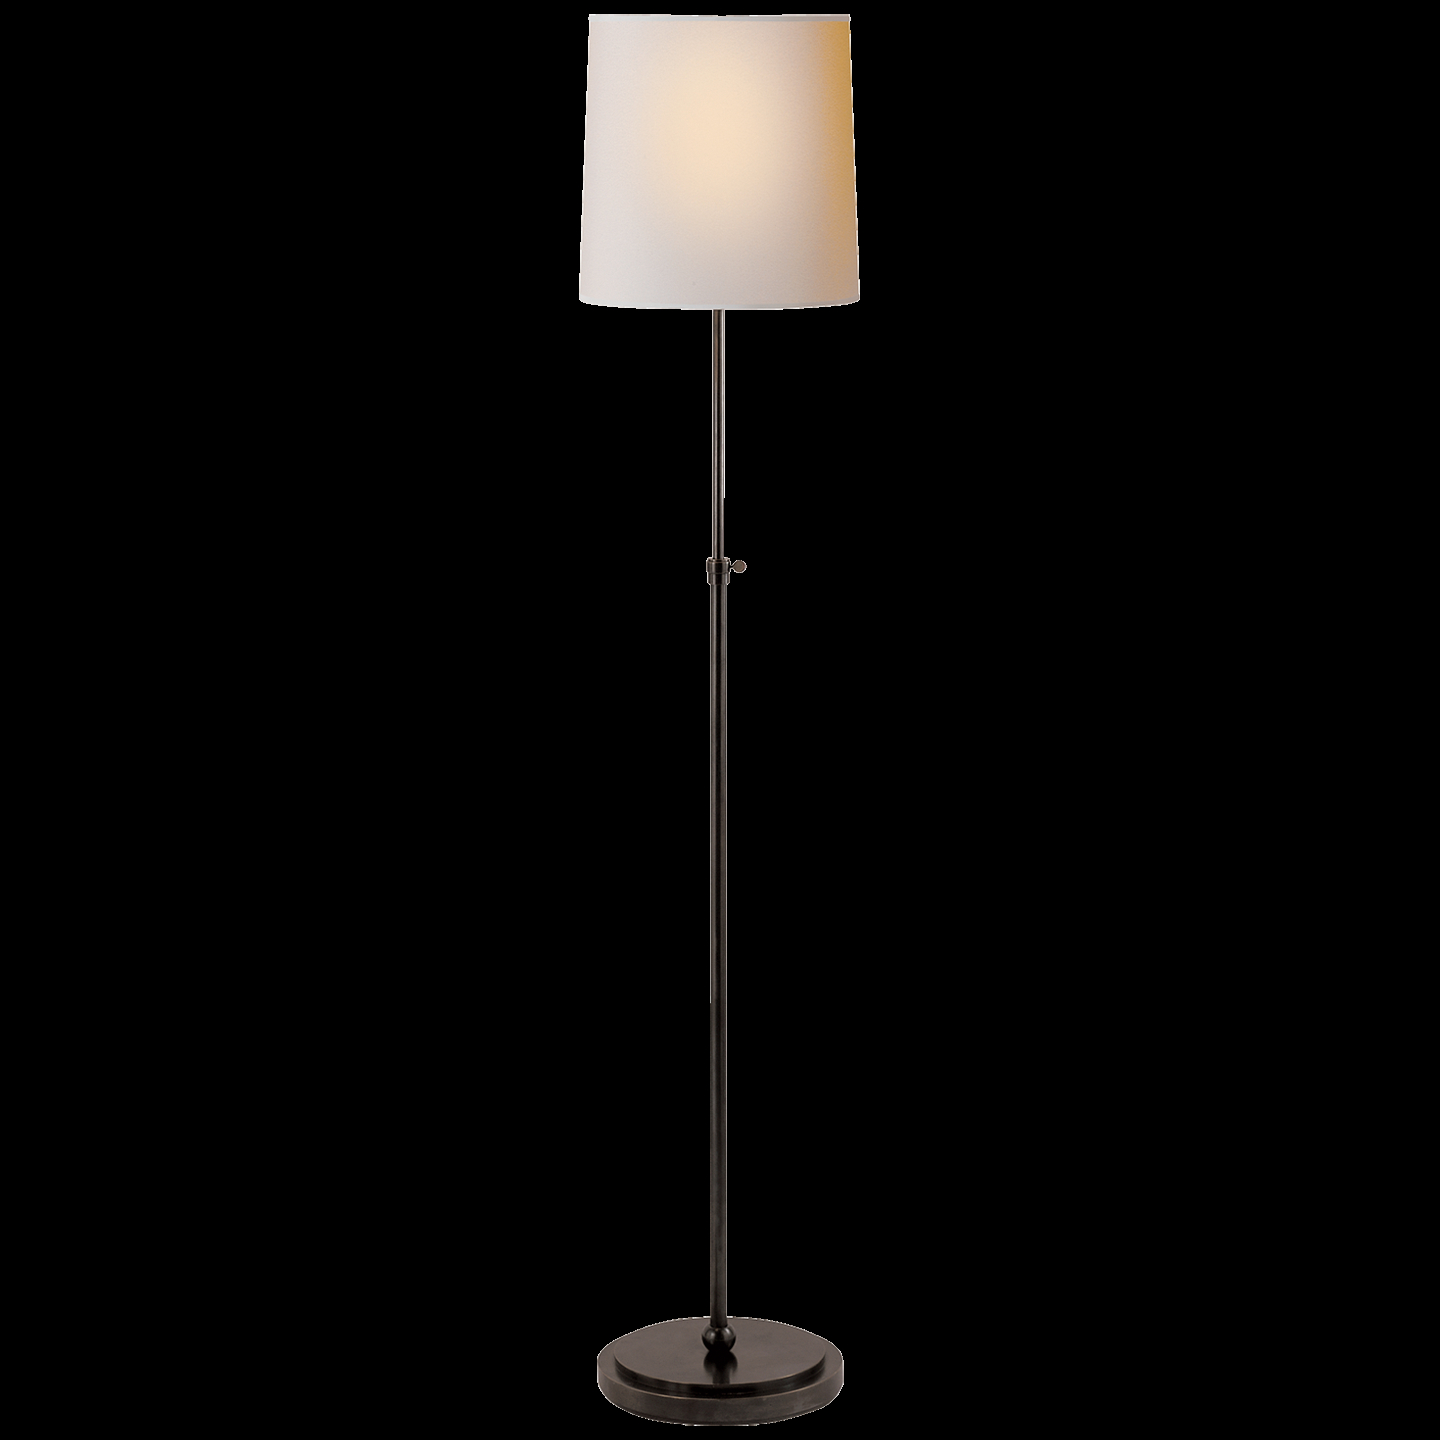 Bryant Floor Lamp In 2019 Floor Lamp Cool Floor Lamps throughout dimensions 1440 X 1440